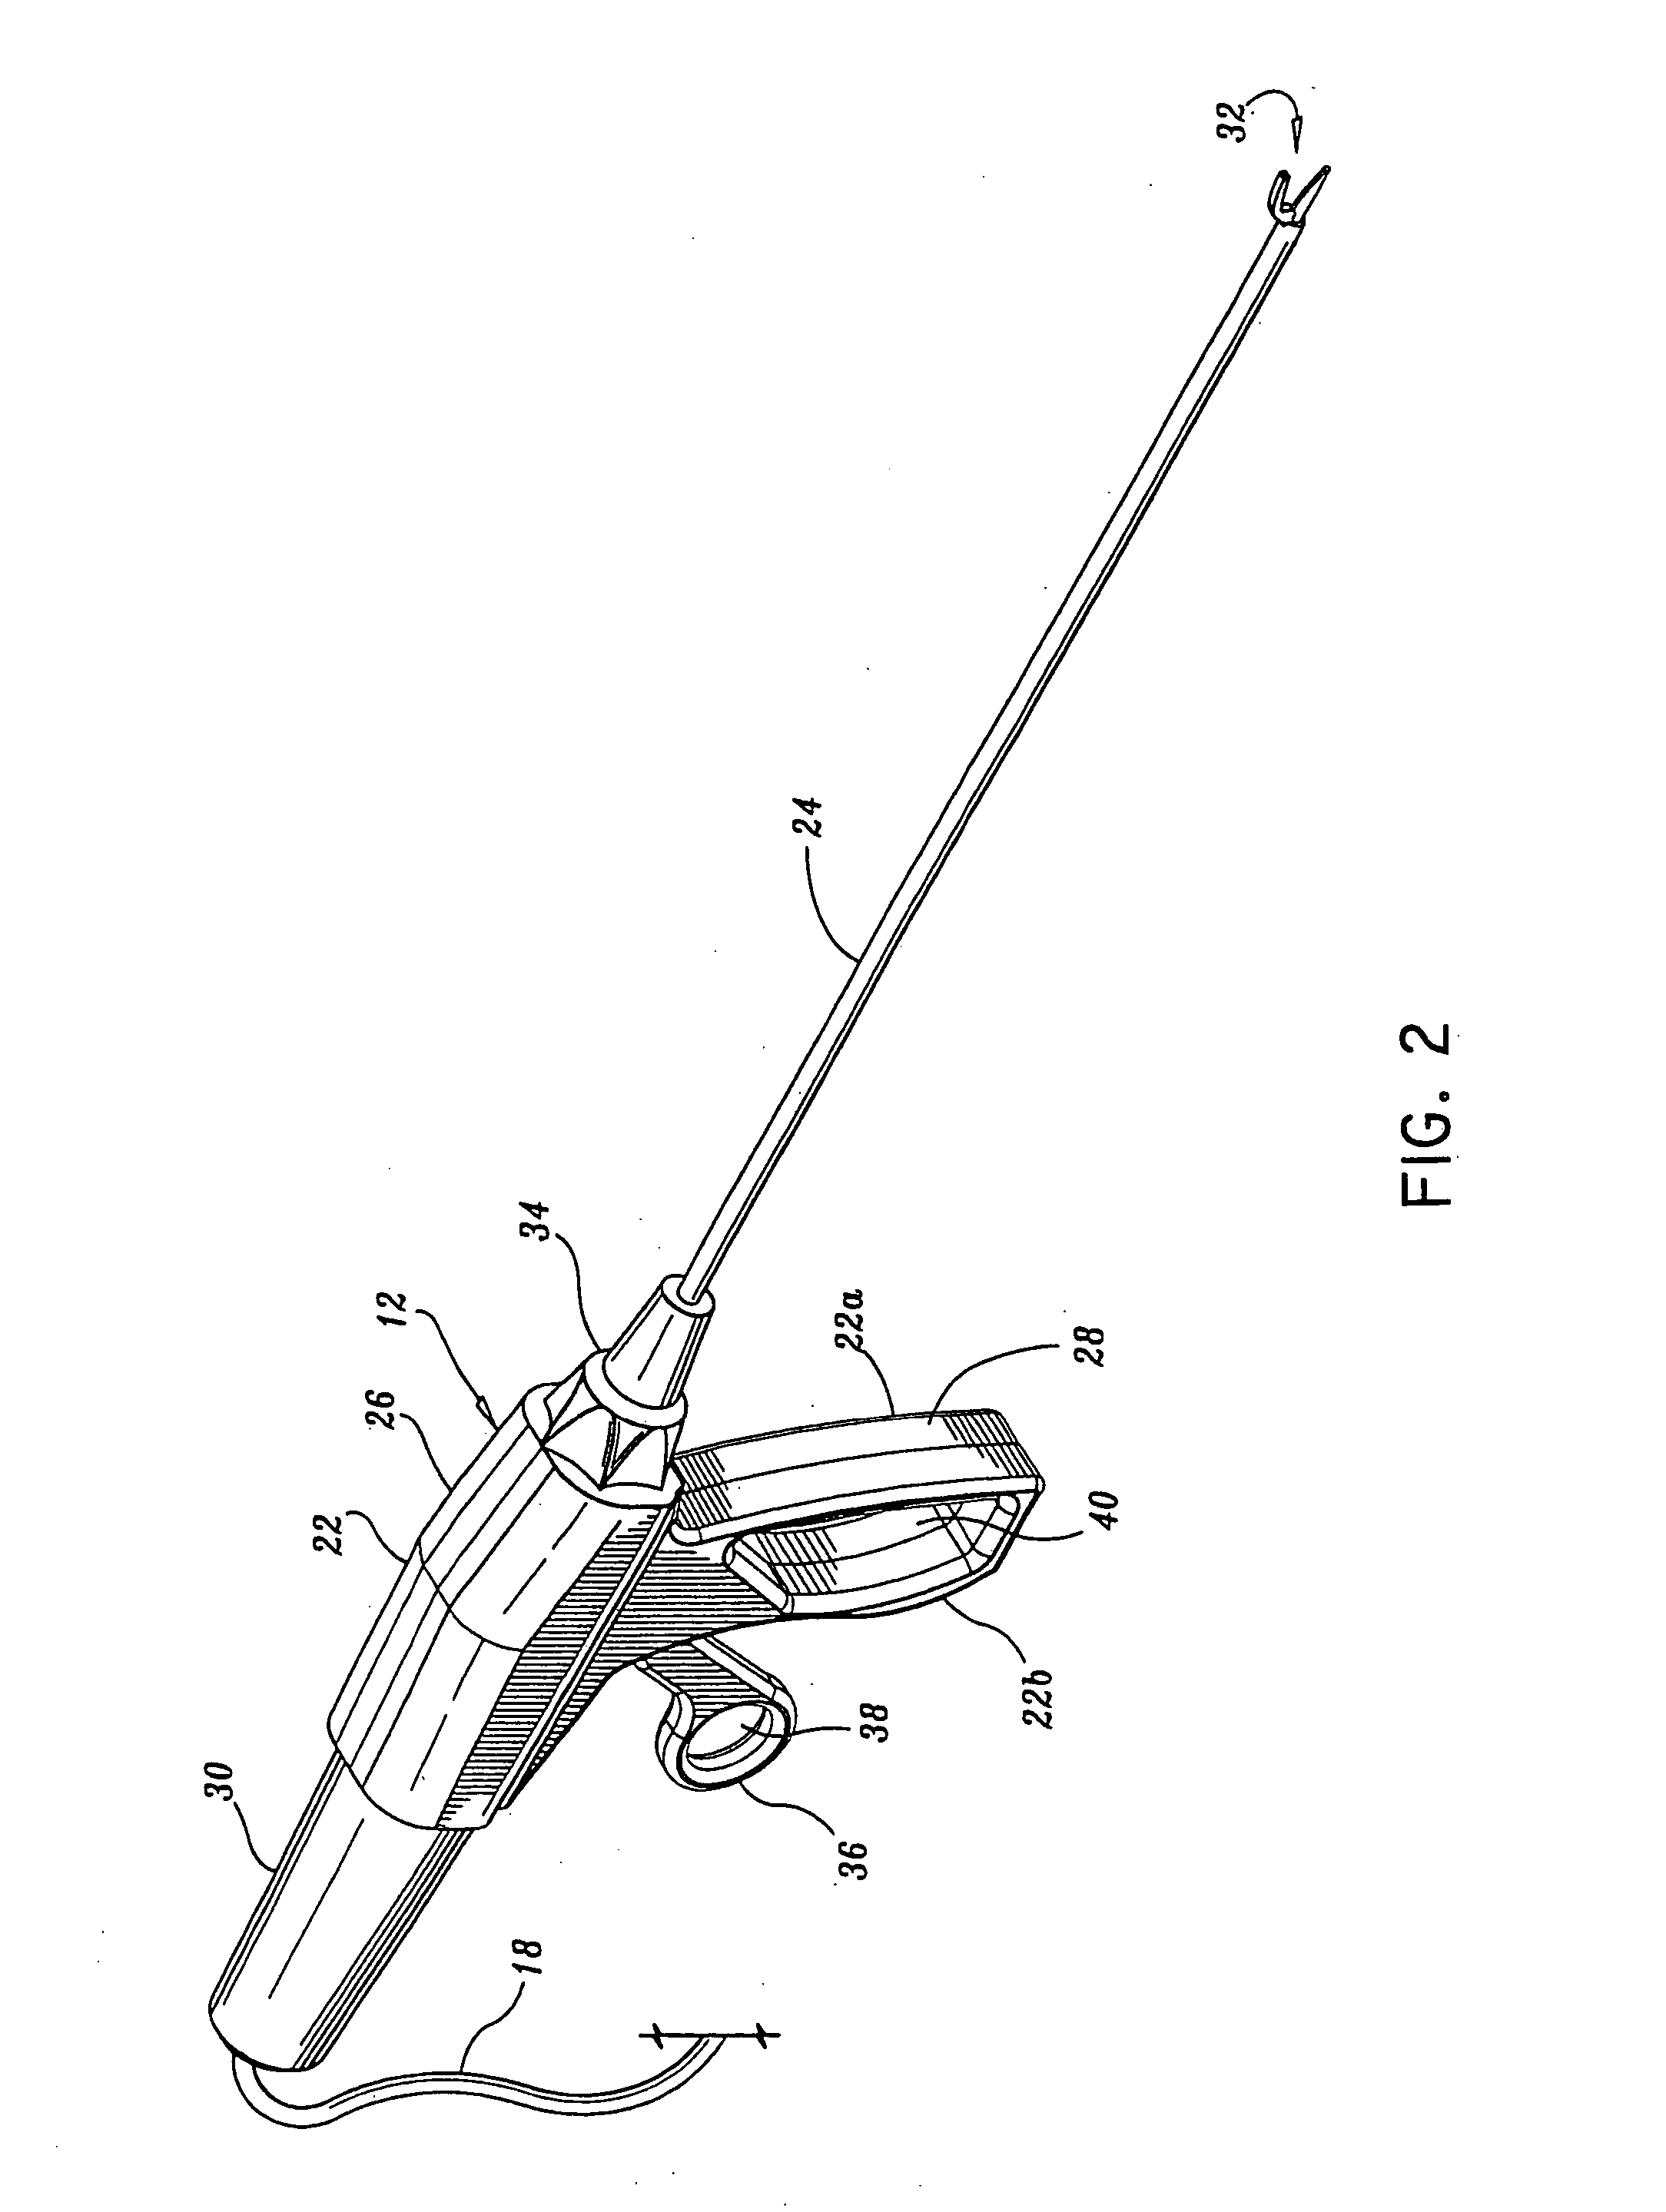 Ultrasonic curved blade